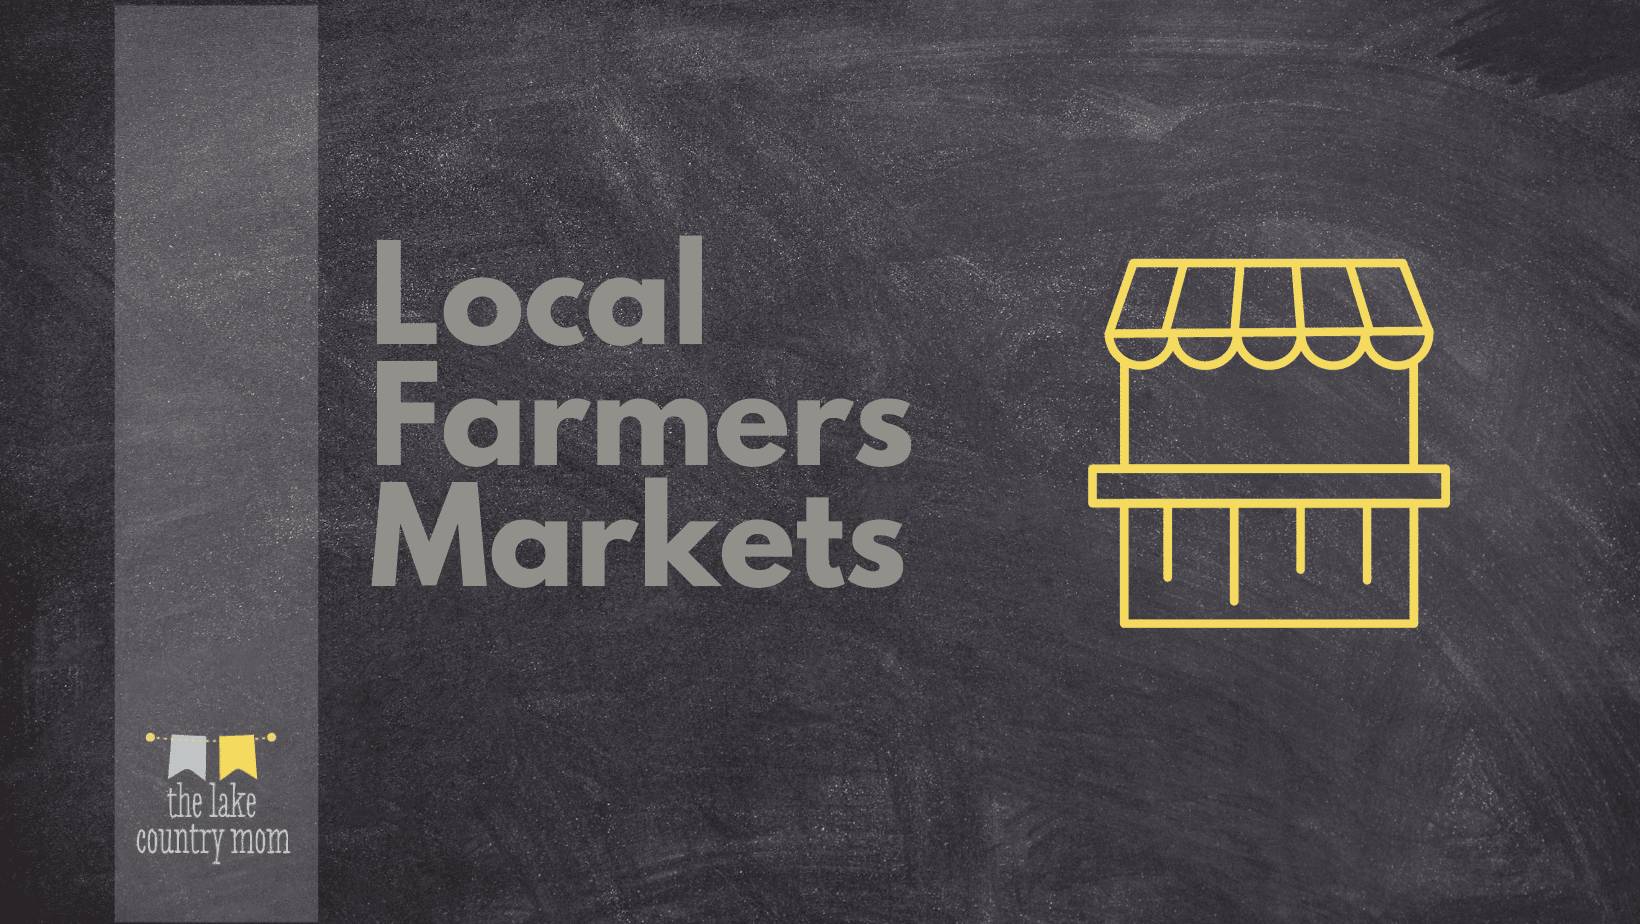 Local farmers markets